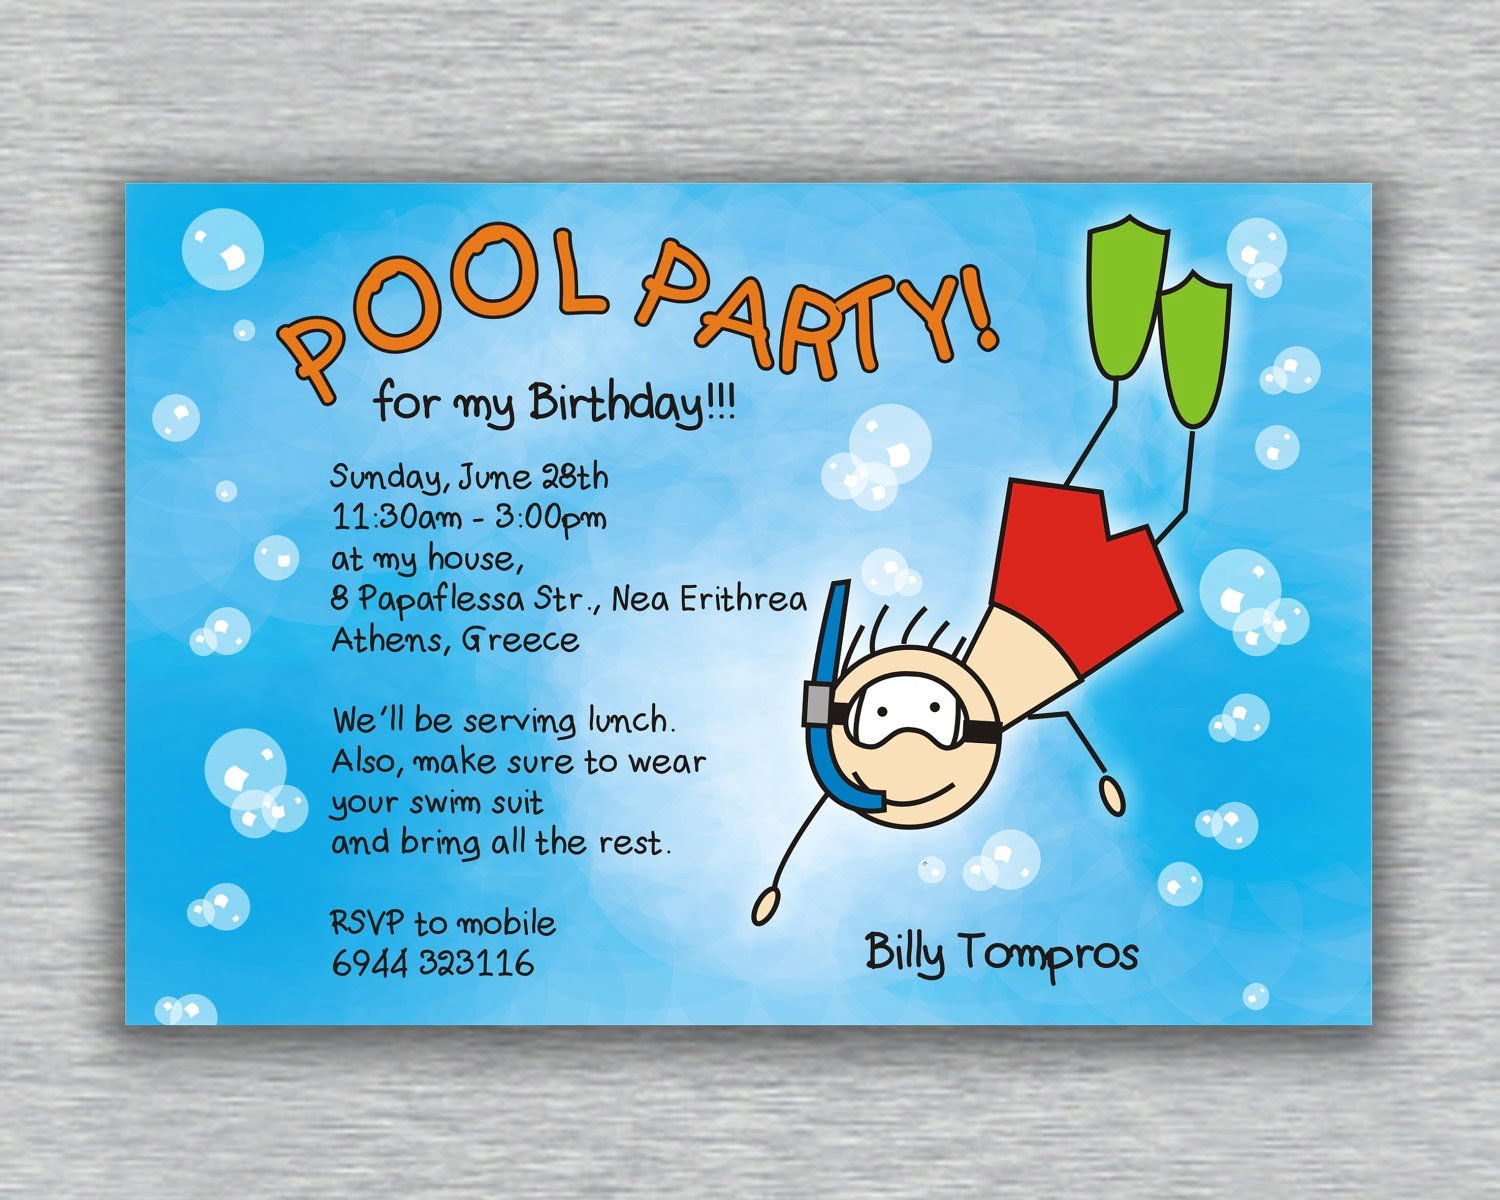 Birthday Pool Party Invitations Birthday Pool Party Invitations